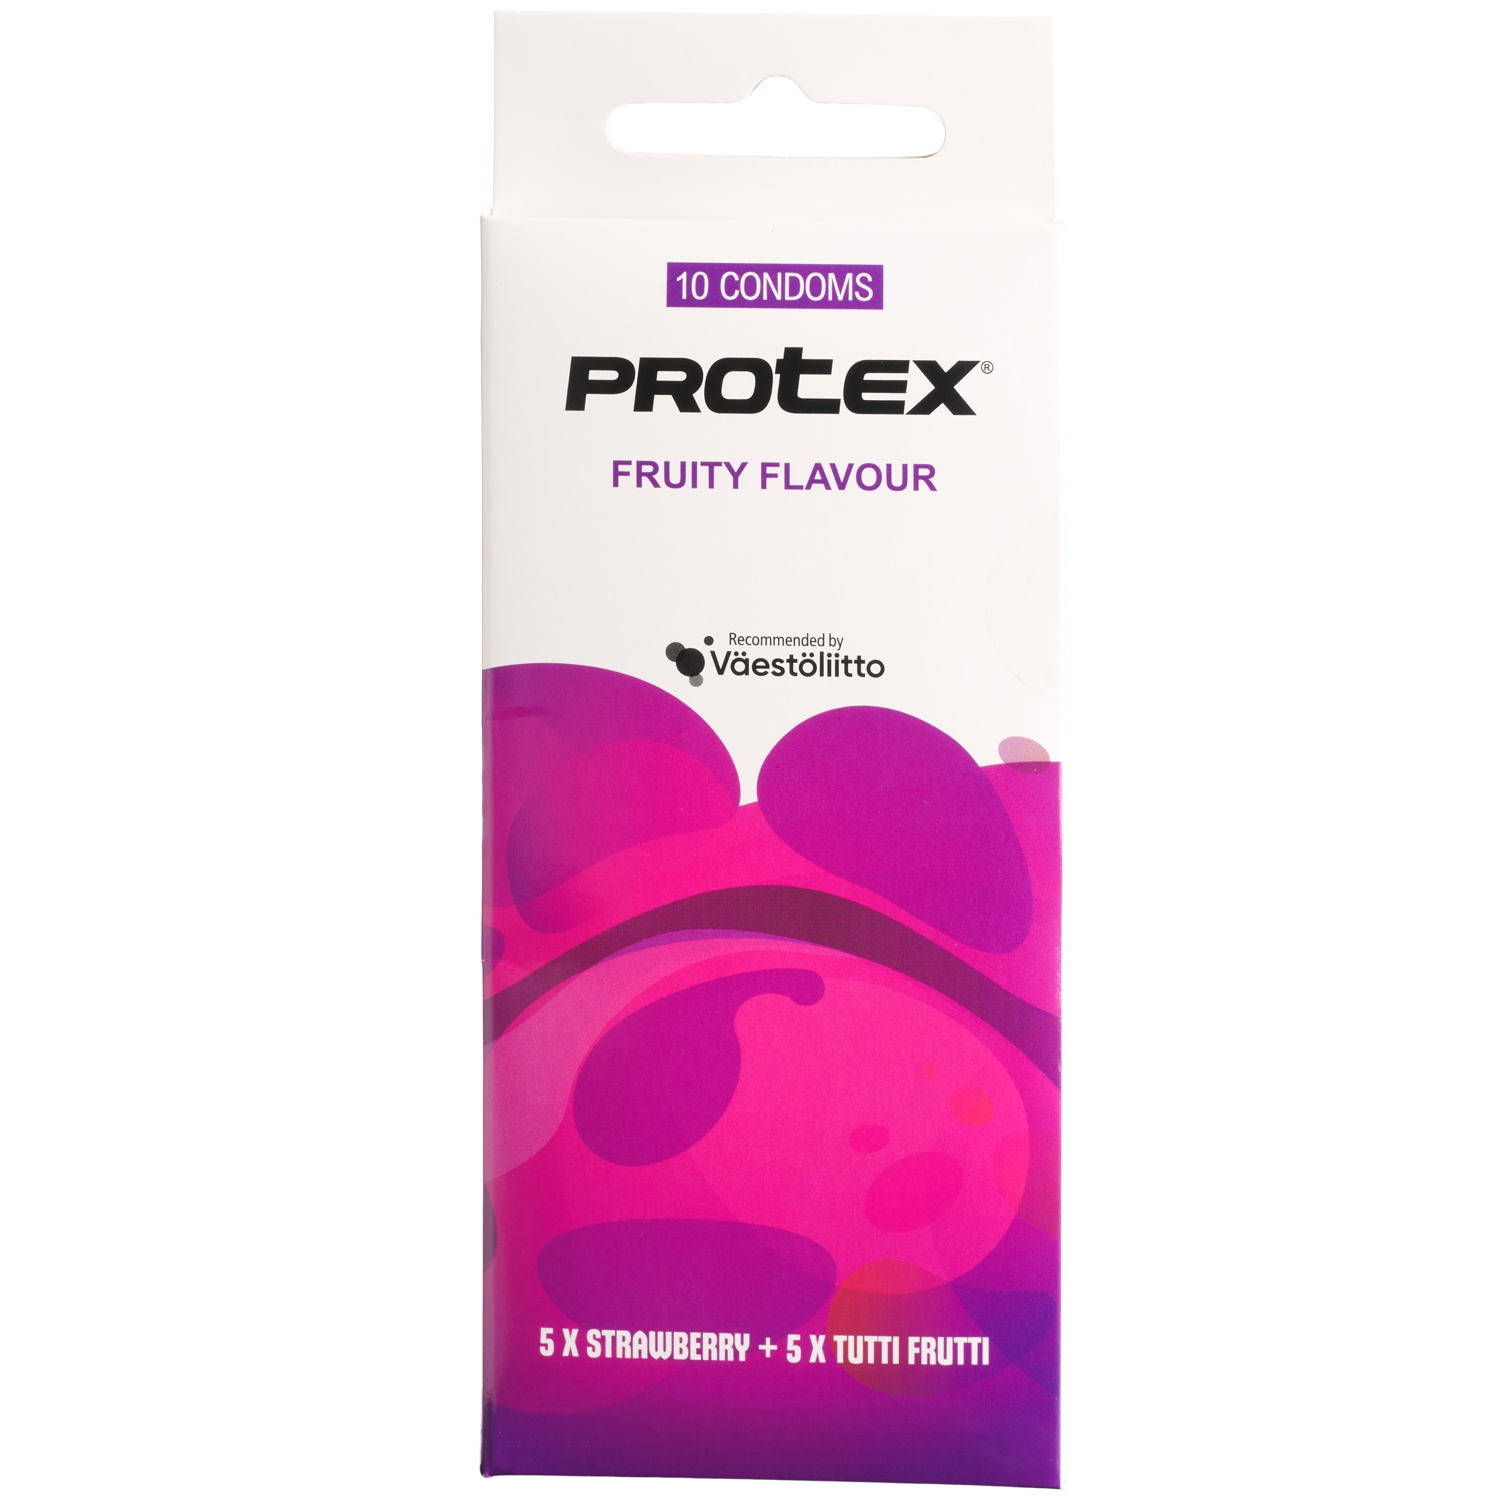 Protex Fruity Flavour Strawberry & Tutti Frutti Kondomer 10 stk